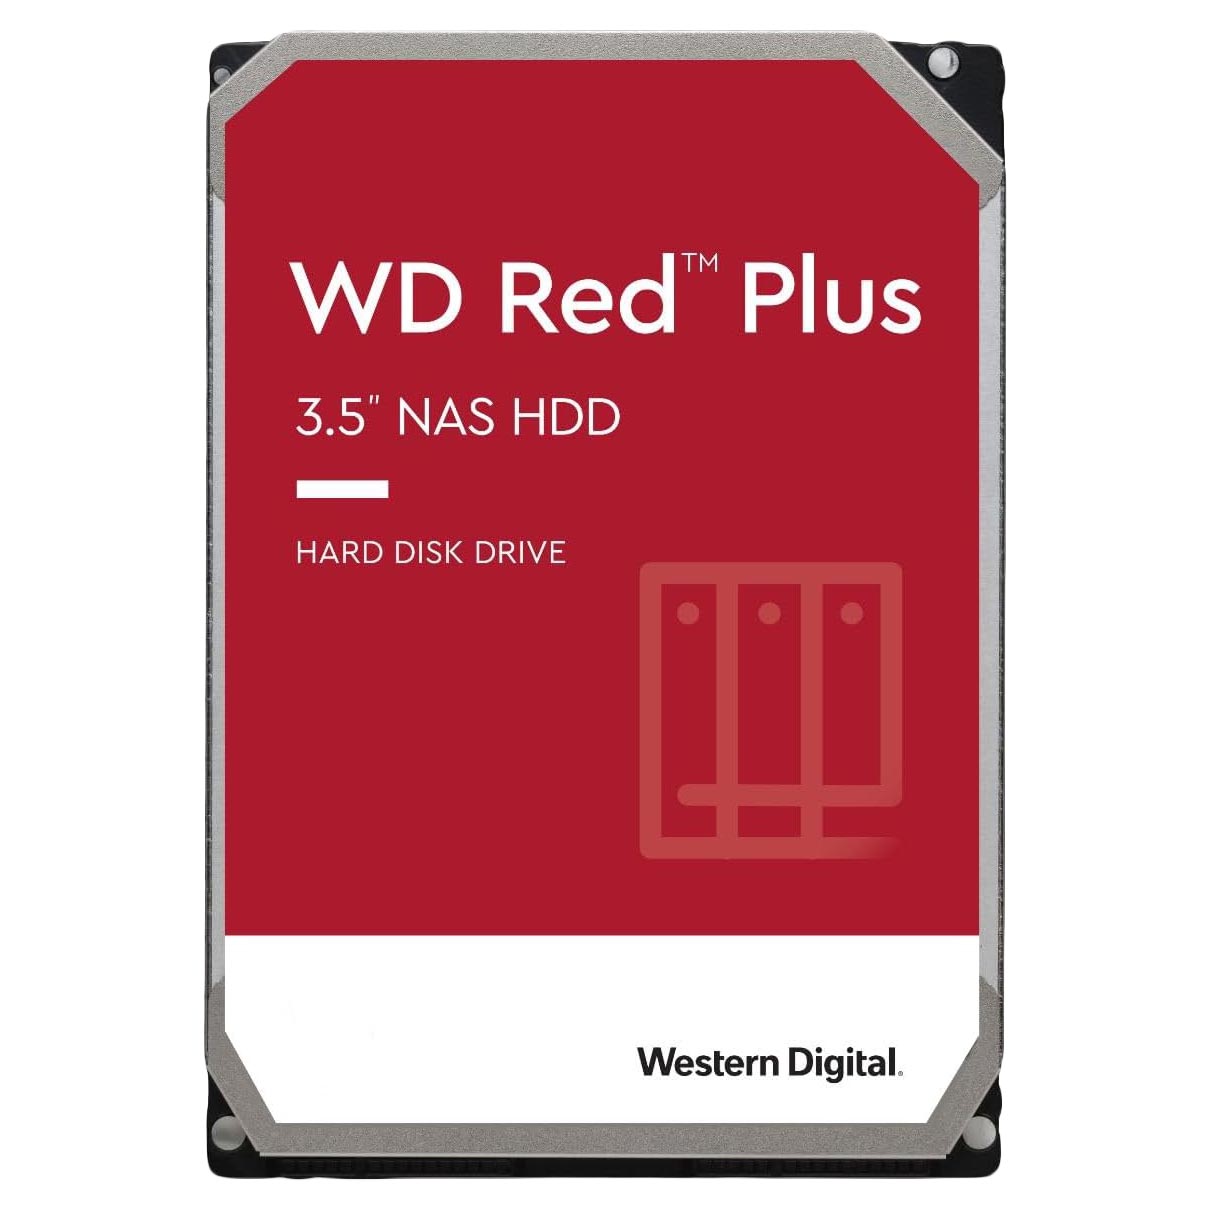 Внутренний жесткий диск Western Digital WD Red Plus, WD20EFZX, 2Тб жесткий диск western digital wd red plus 2 тб wd20efzx